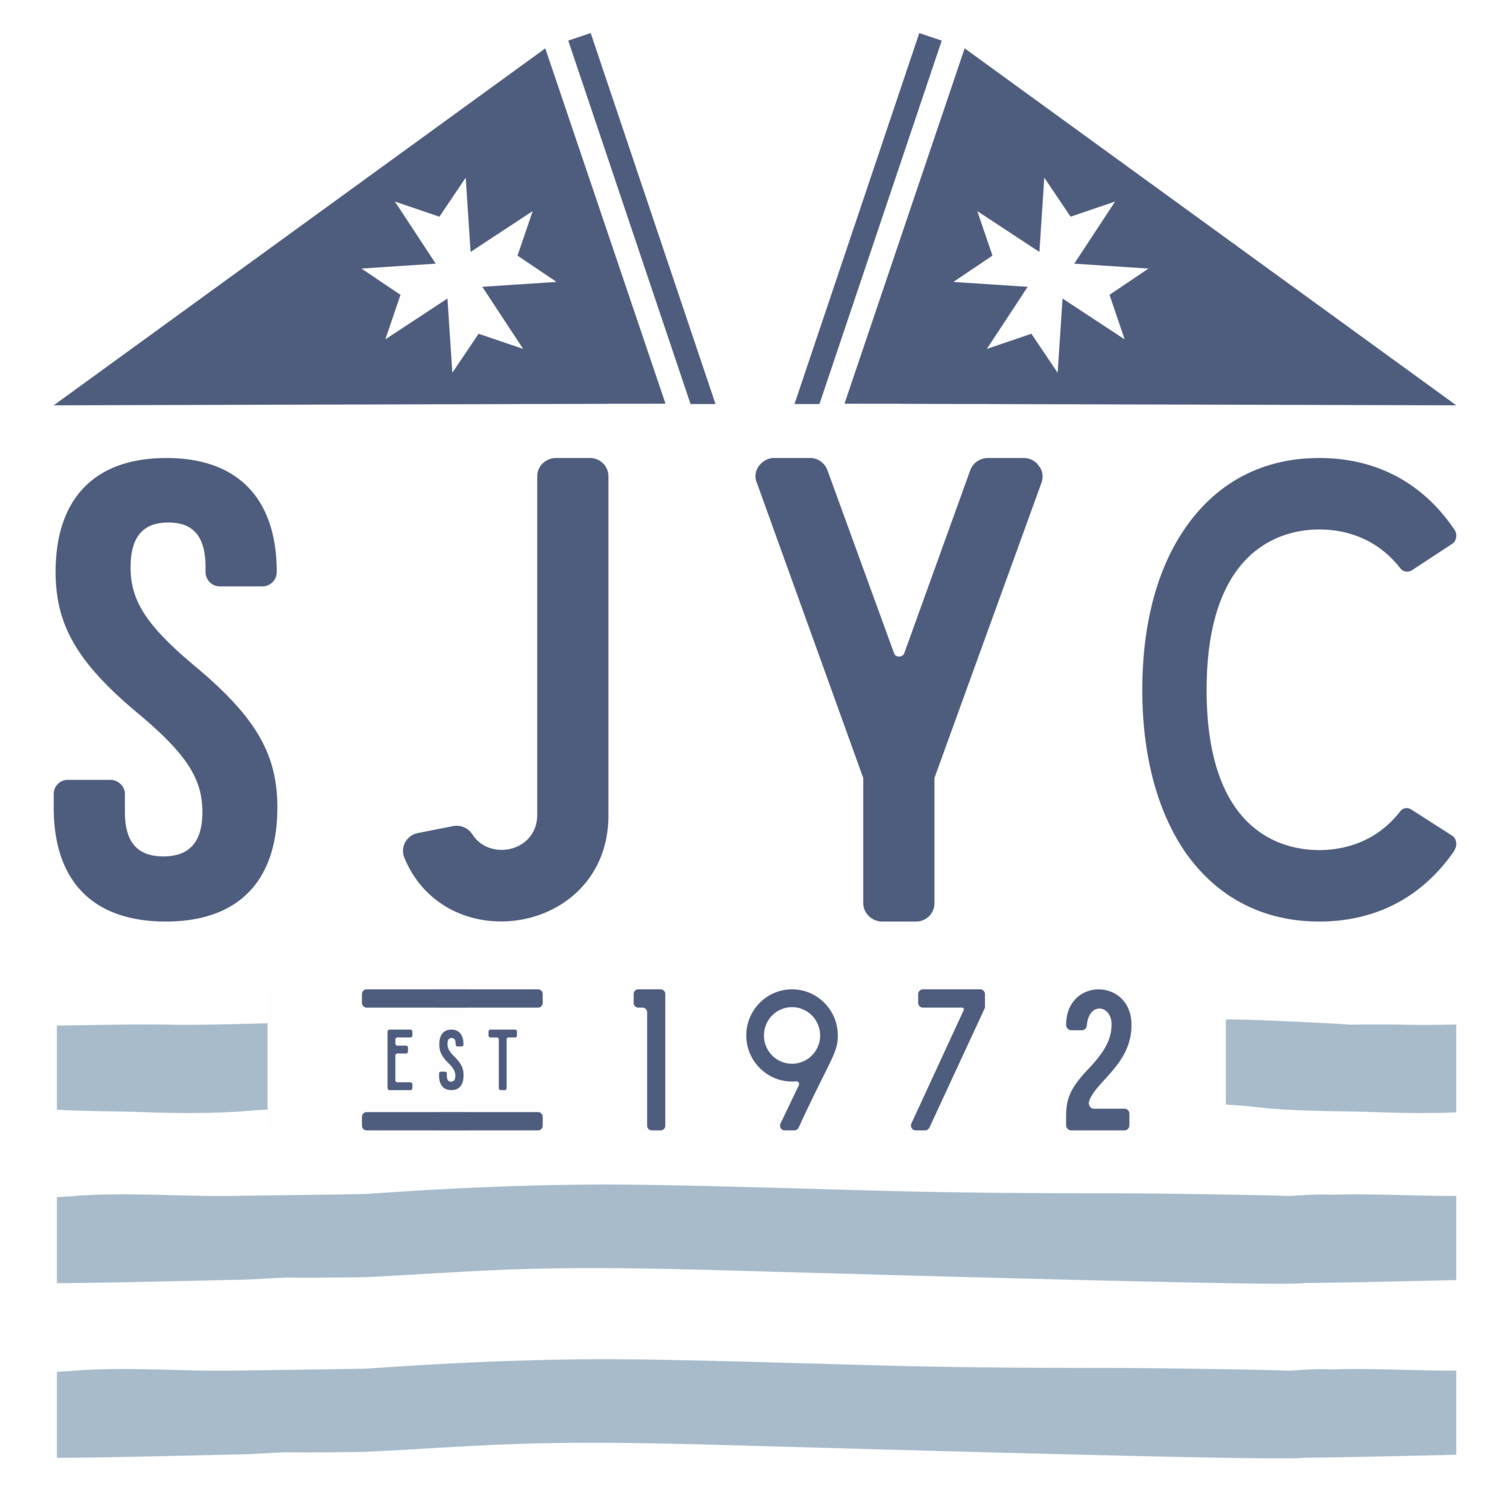 St. John Yacht Club